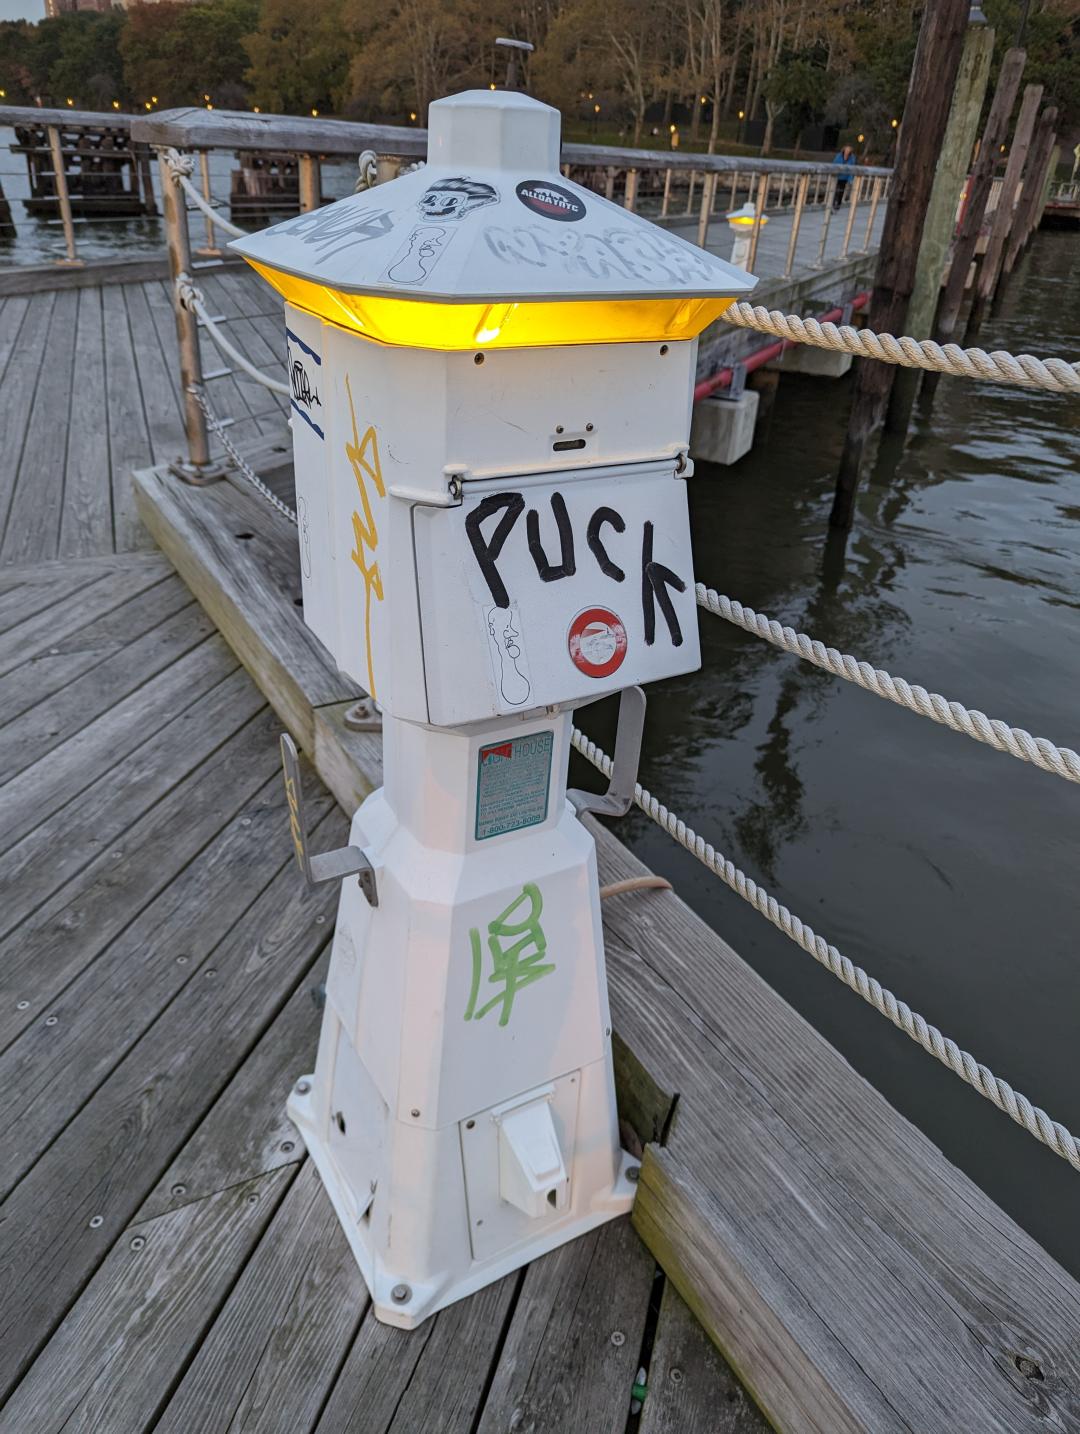 A unique lattern on a dock with graffati reading "Puck"